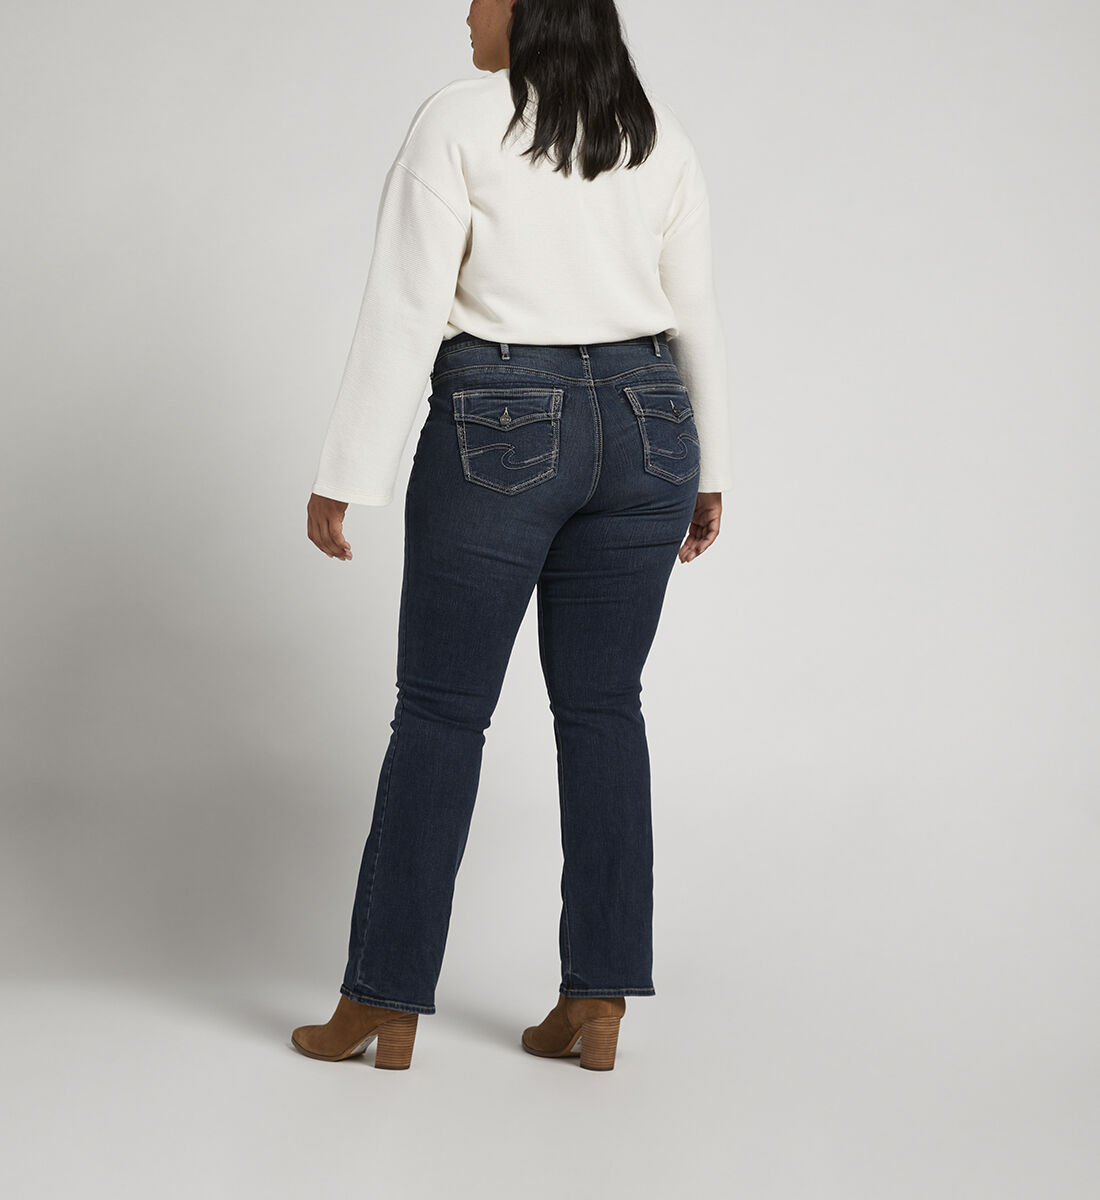 Belt L S Women's Stretch Bootcut Gray Denim Jeans XS XL M 